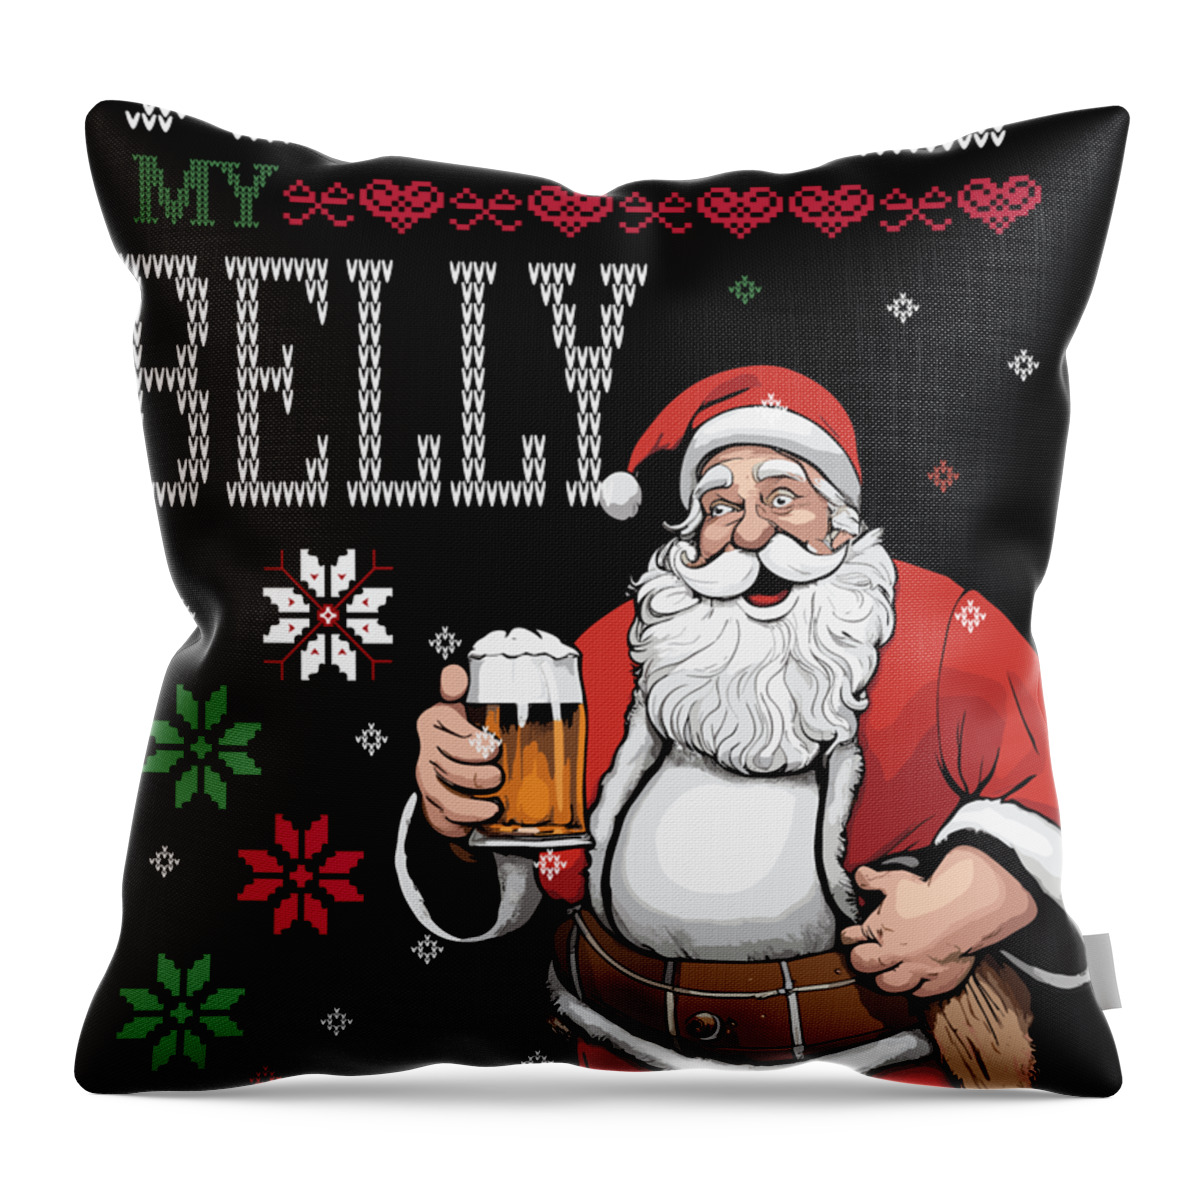 Santa Claus Throw Pillow featuring the digital art Jingle Santa Claus Belly Beer by Long Shot